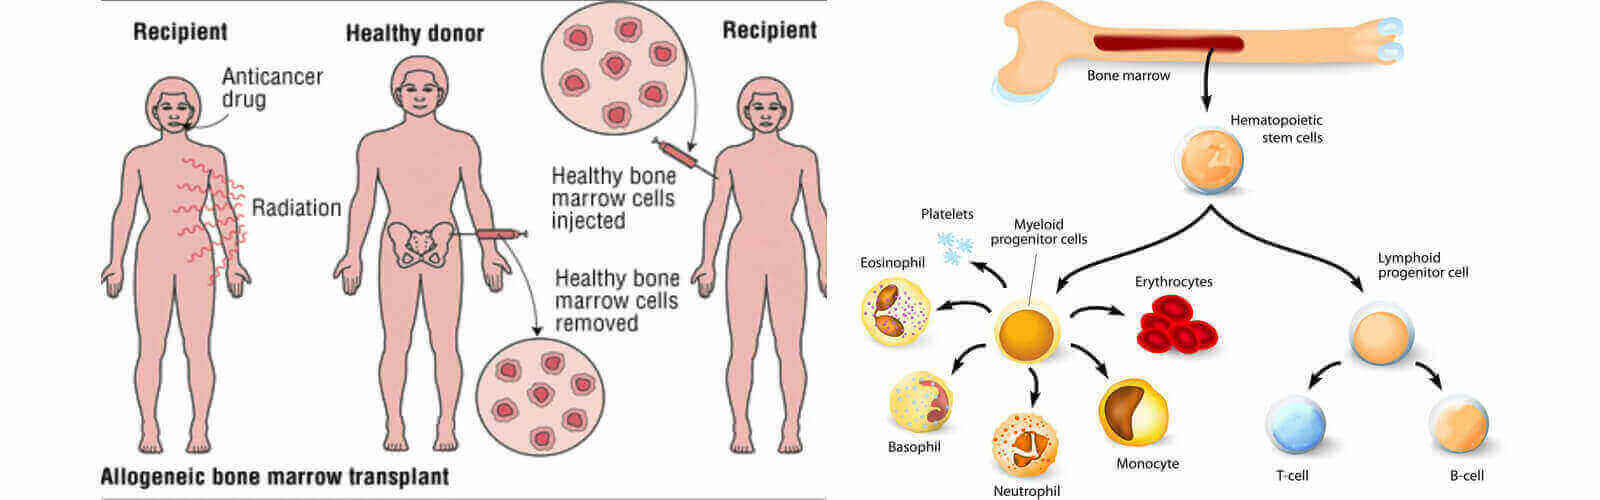 allogeneic bone marrow transplant